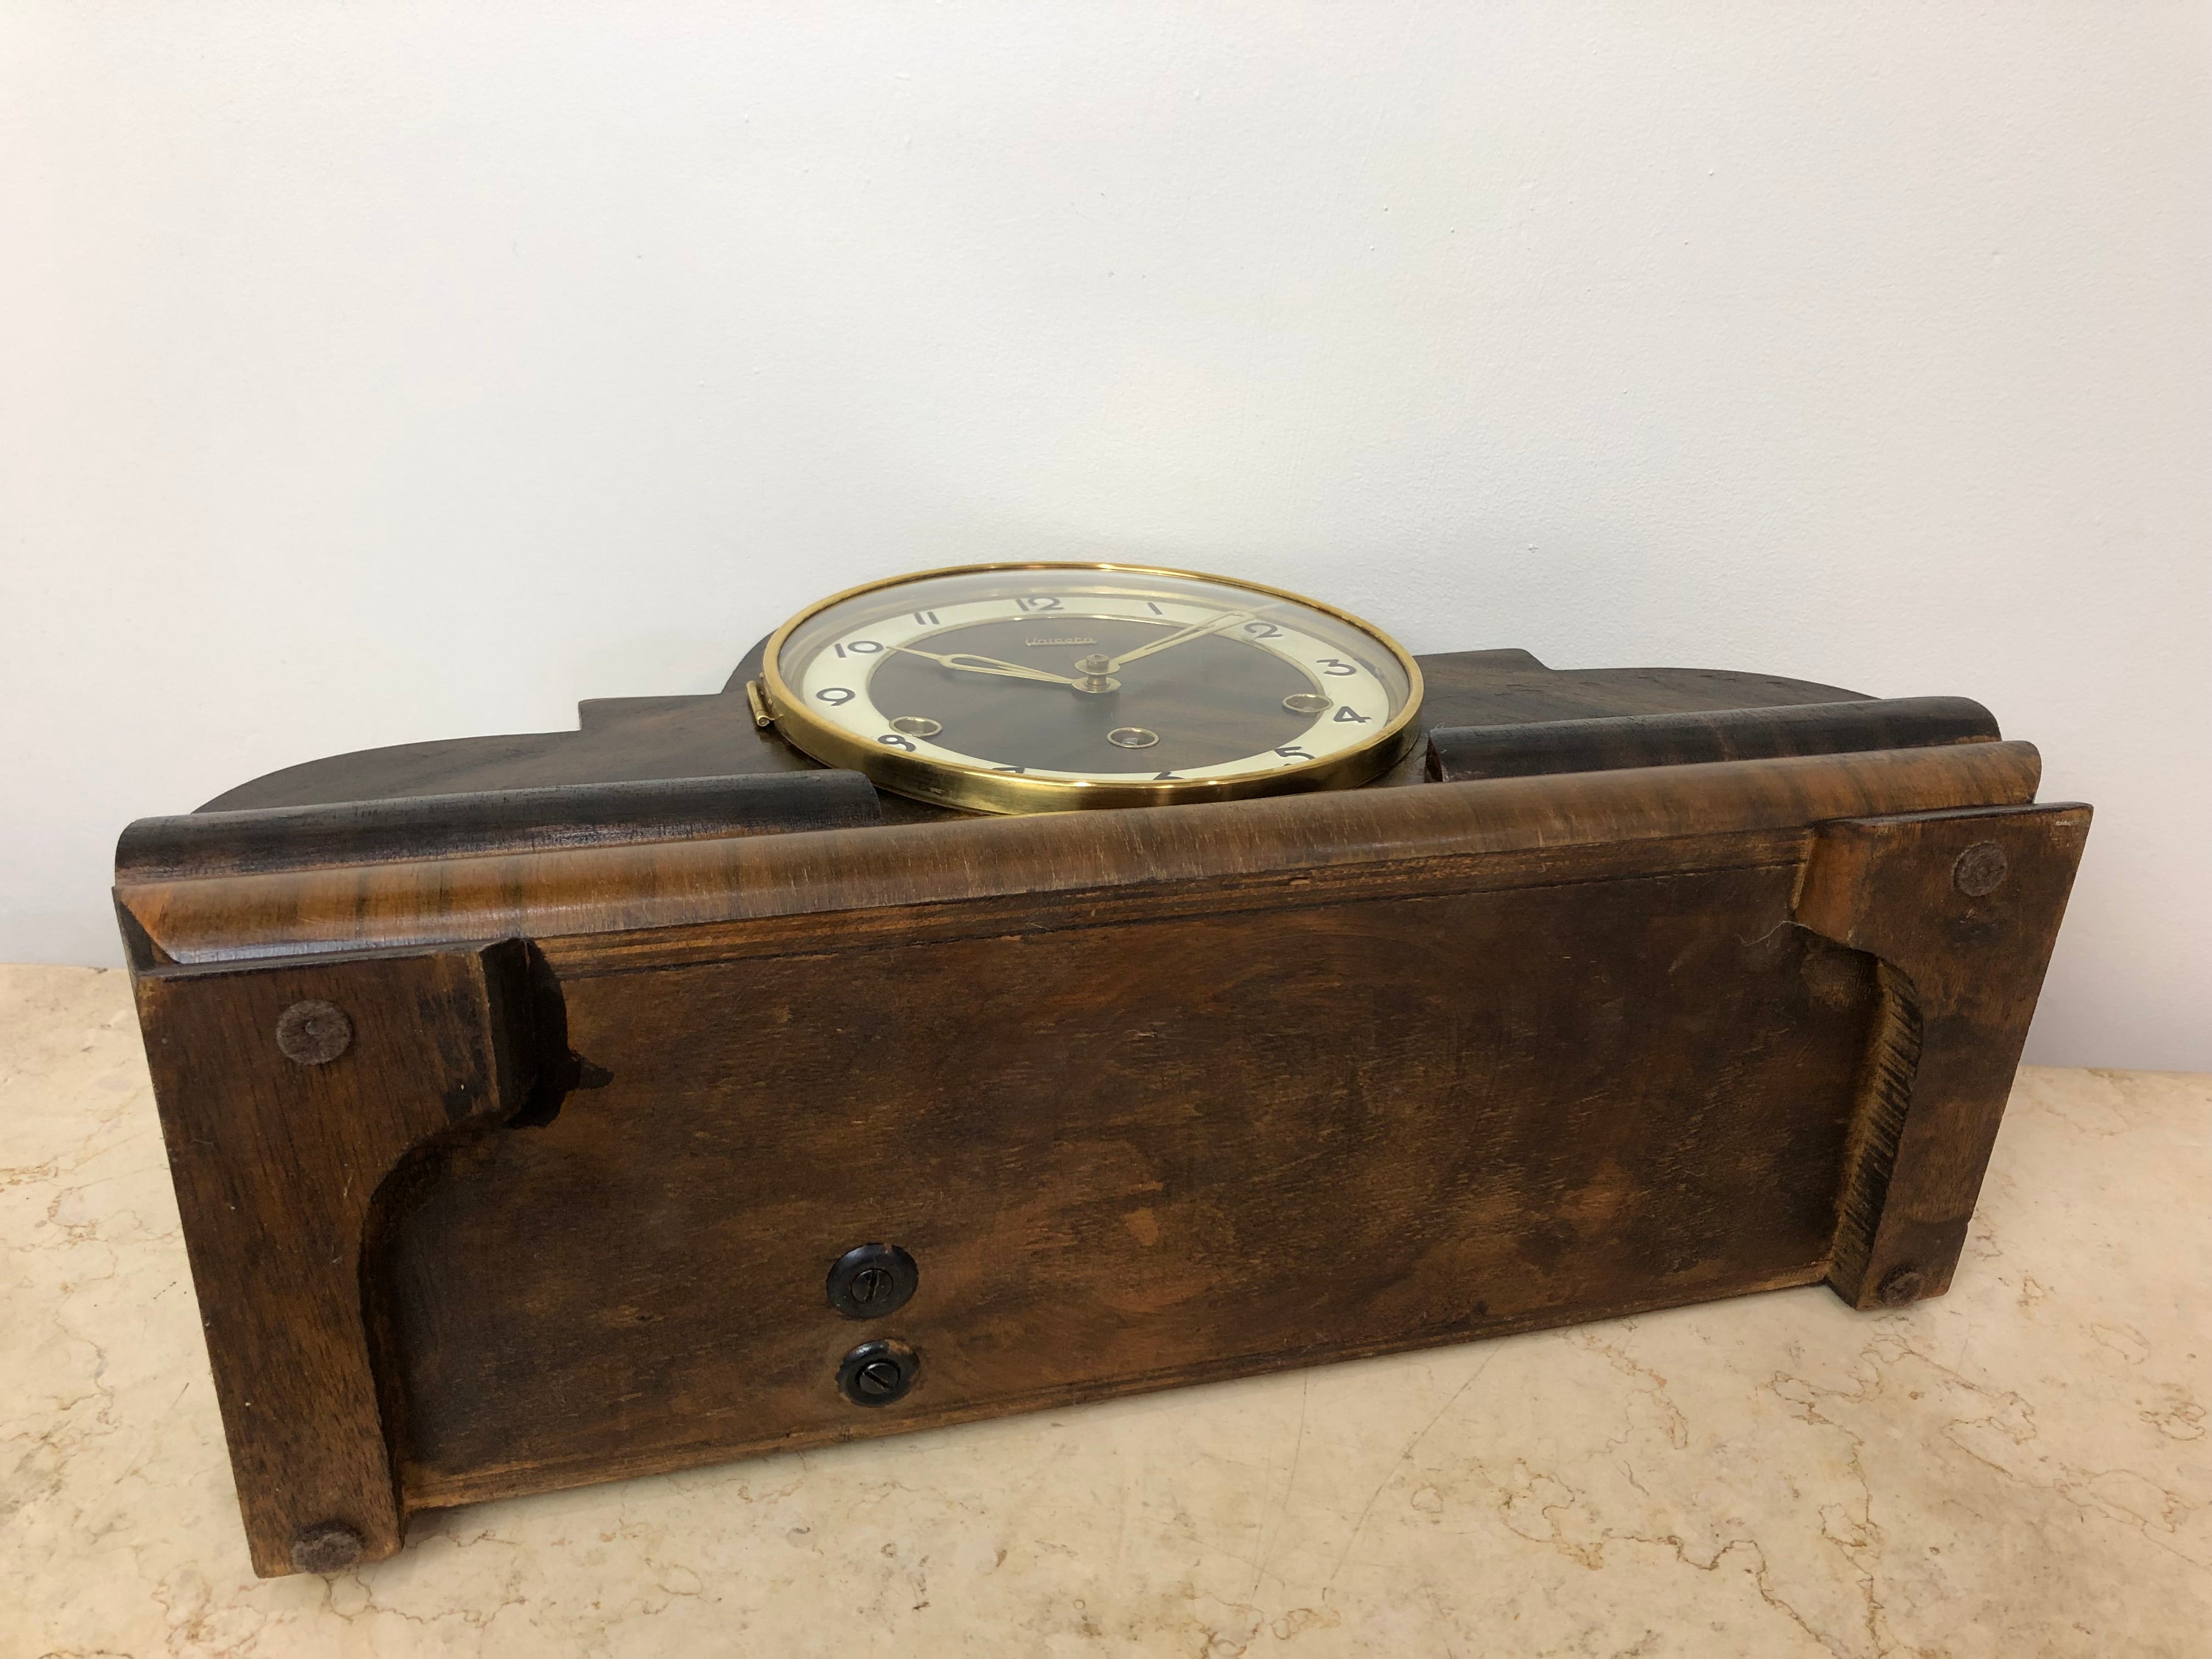 Vintage FHS UNICORN Westminster Chime Mantel Clock | eXibit collection